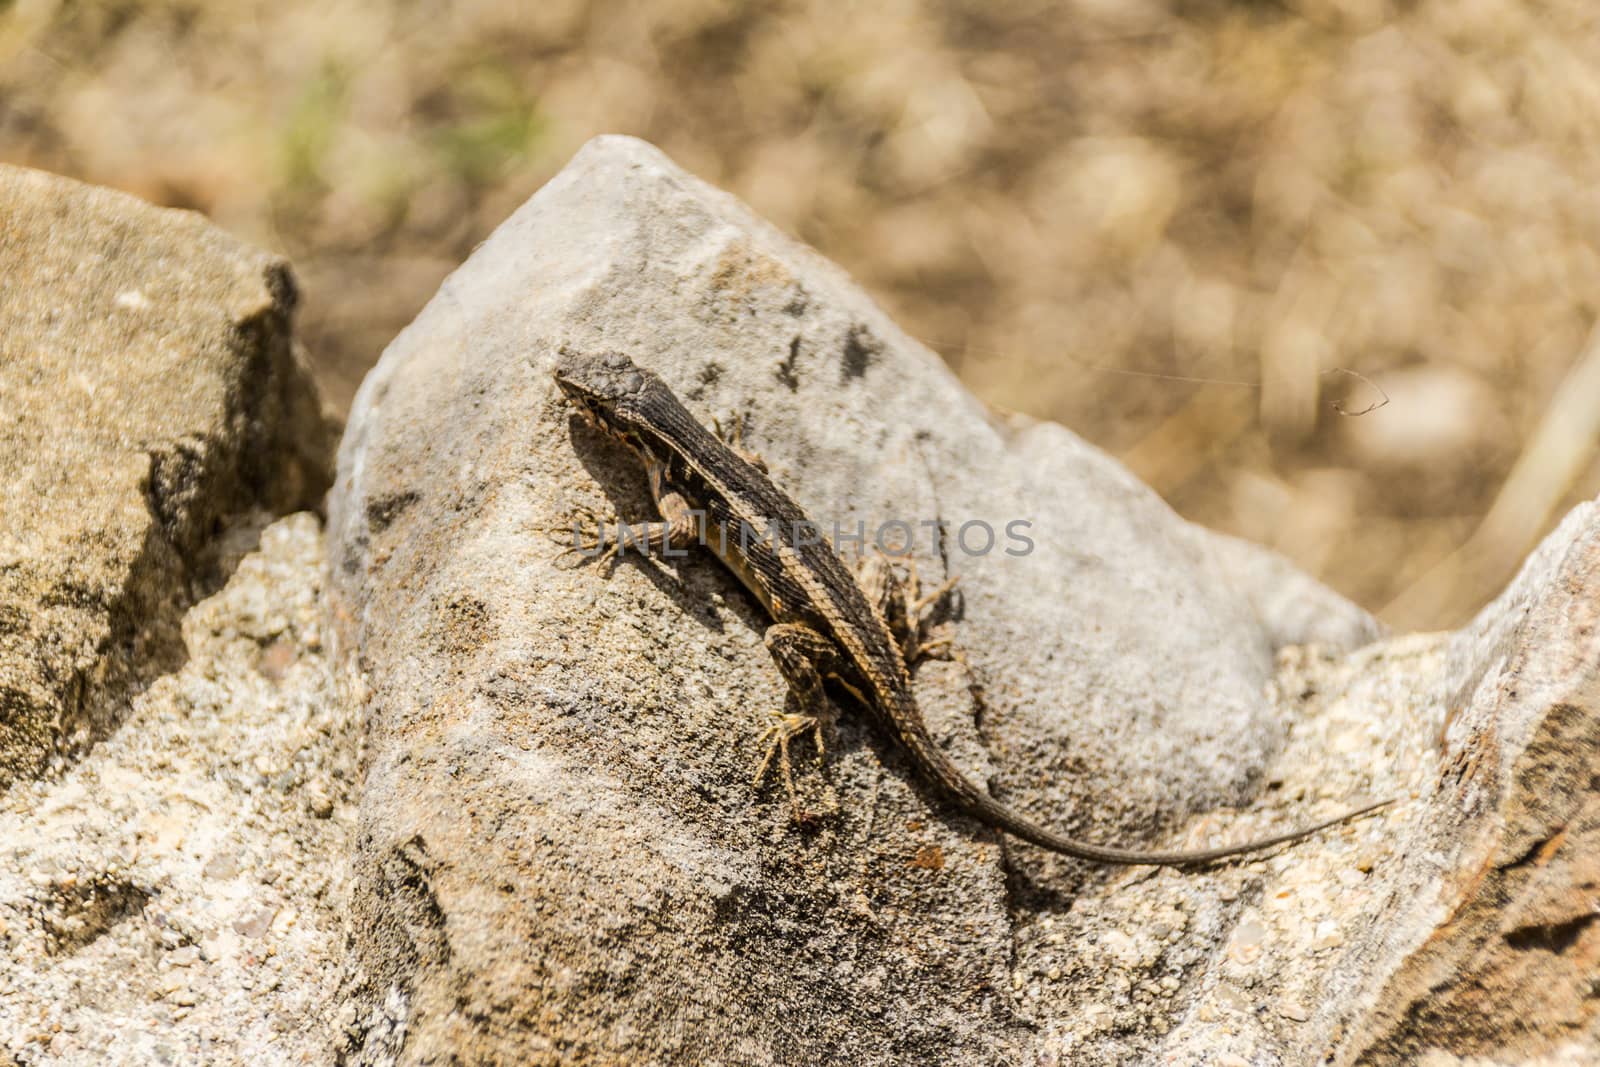 Photograph of a lizard on a rock outdoors